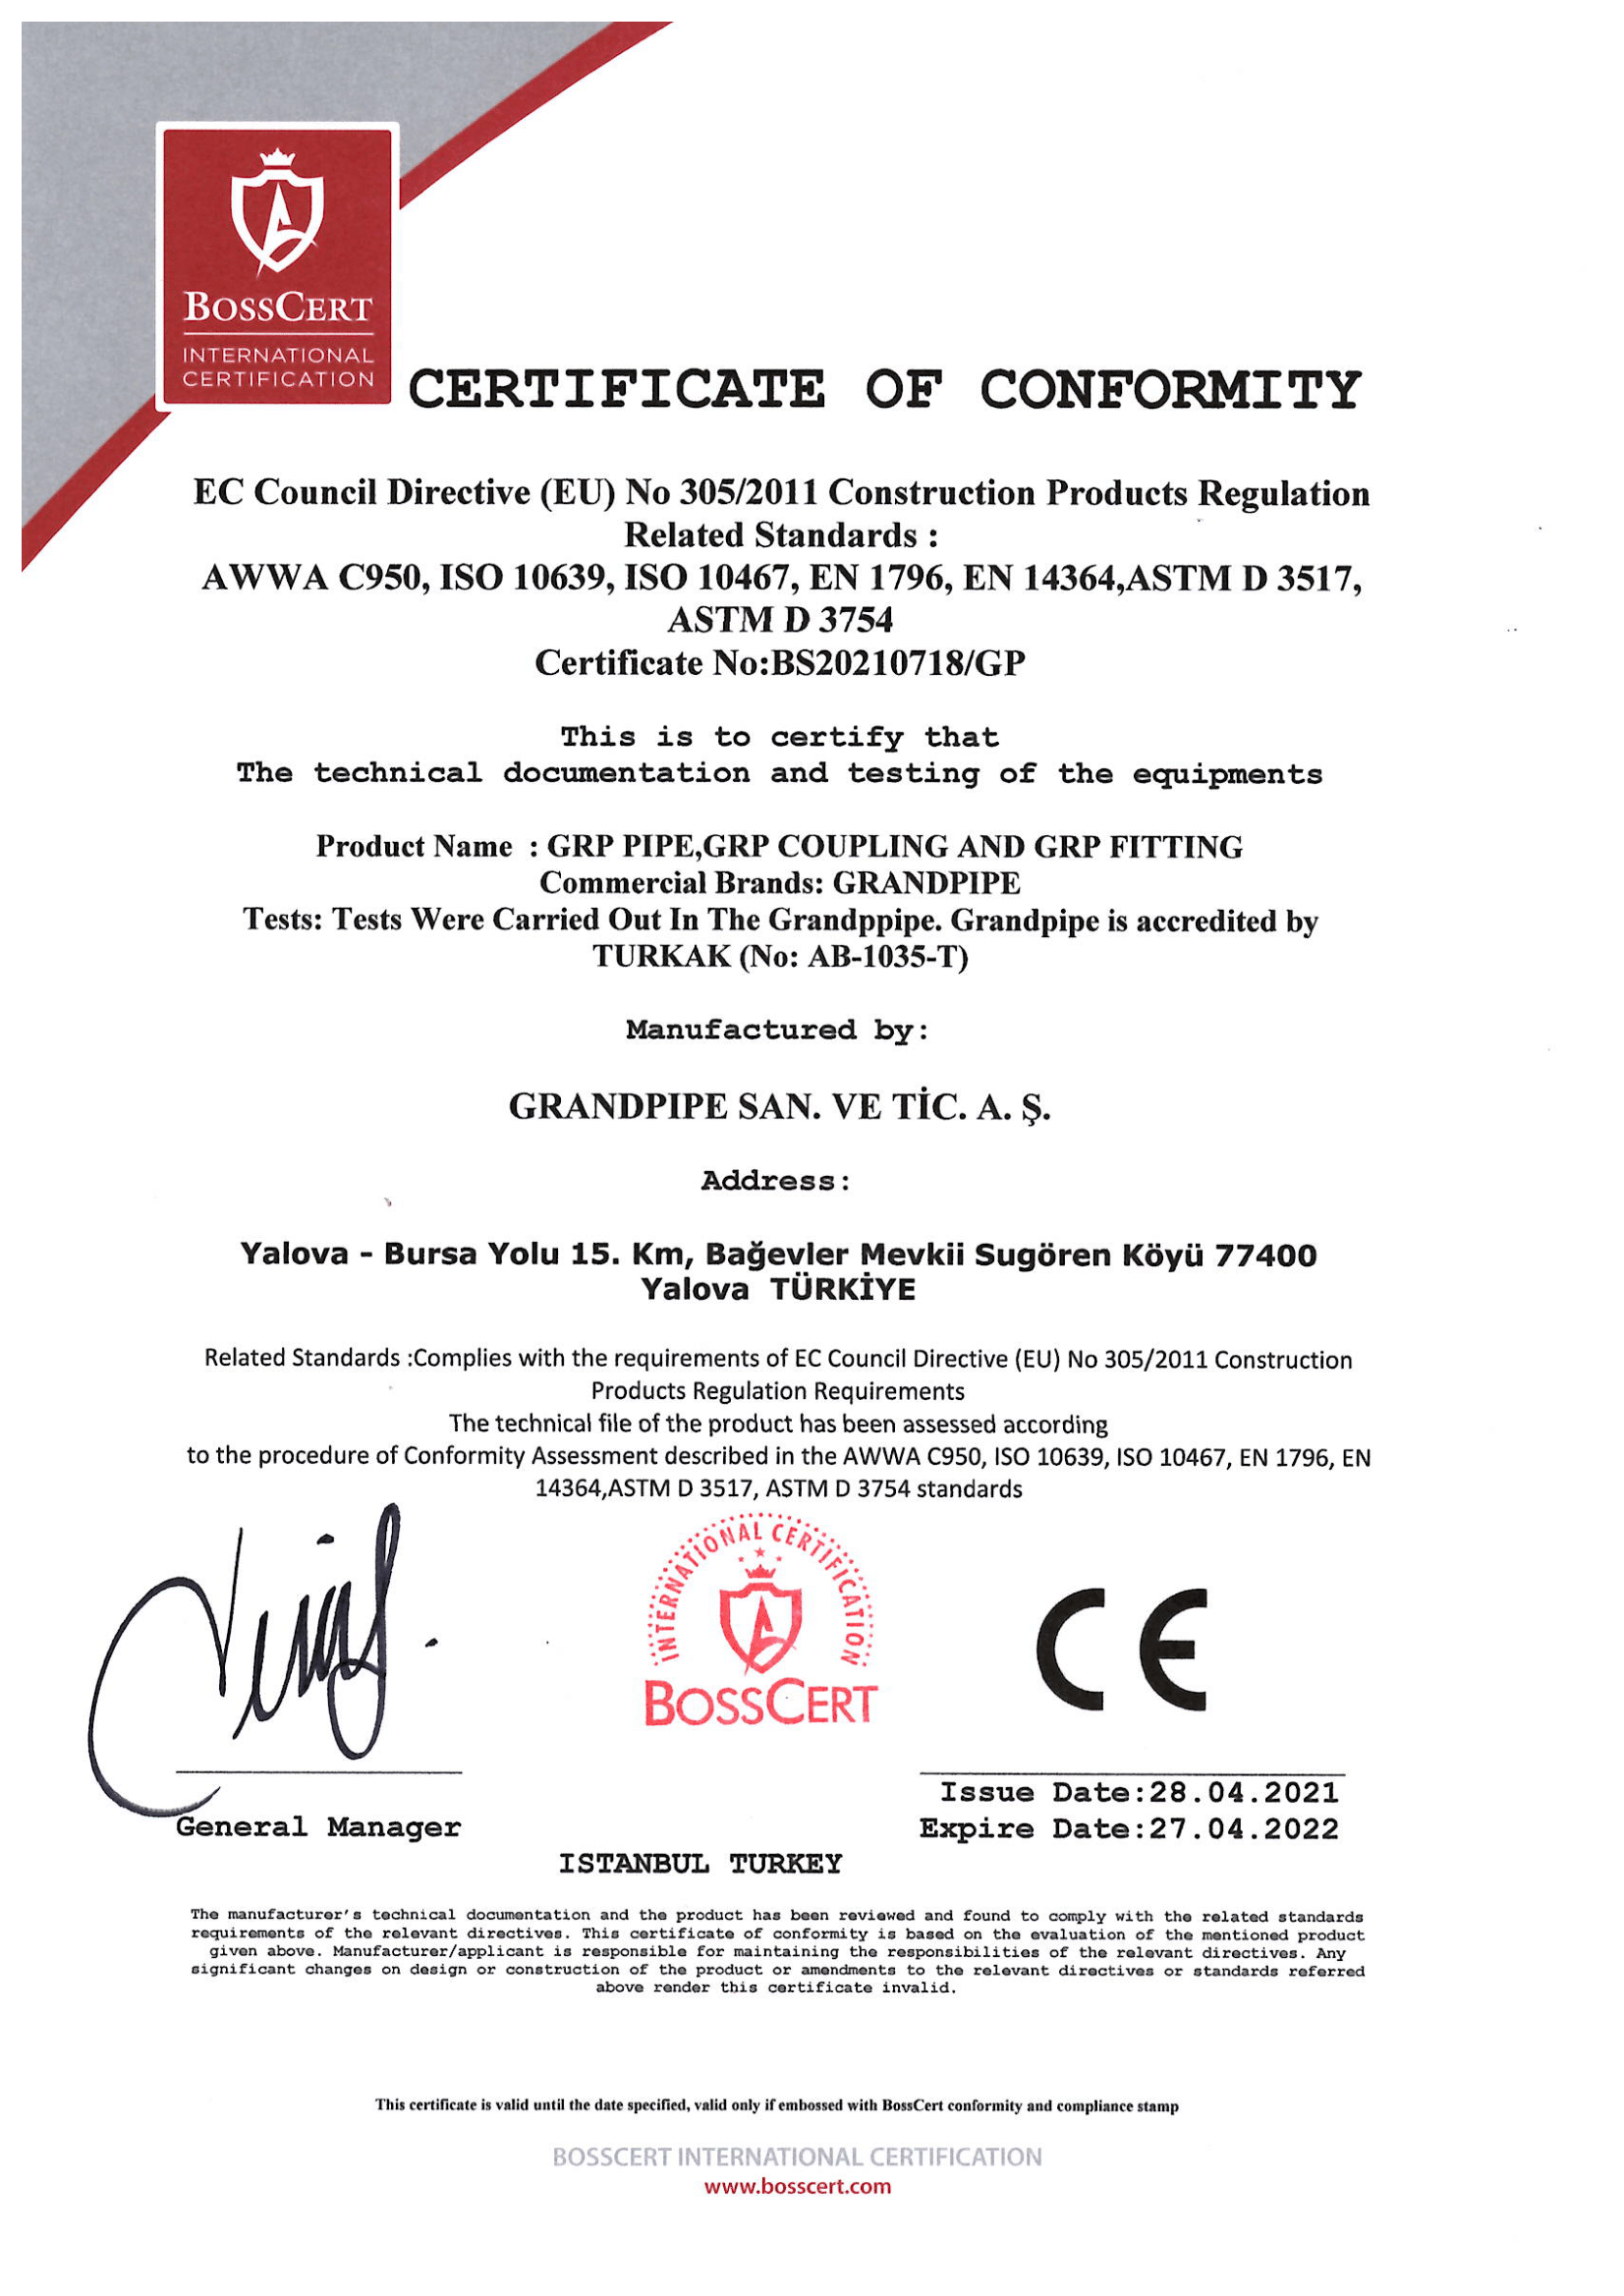 Grandpipe CE Certificate